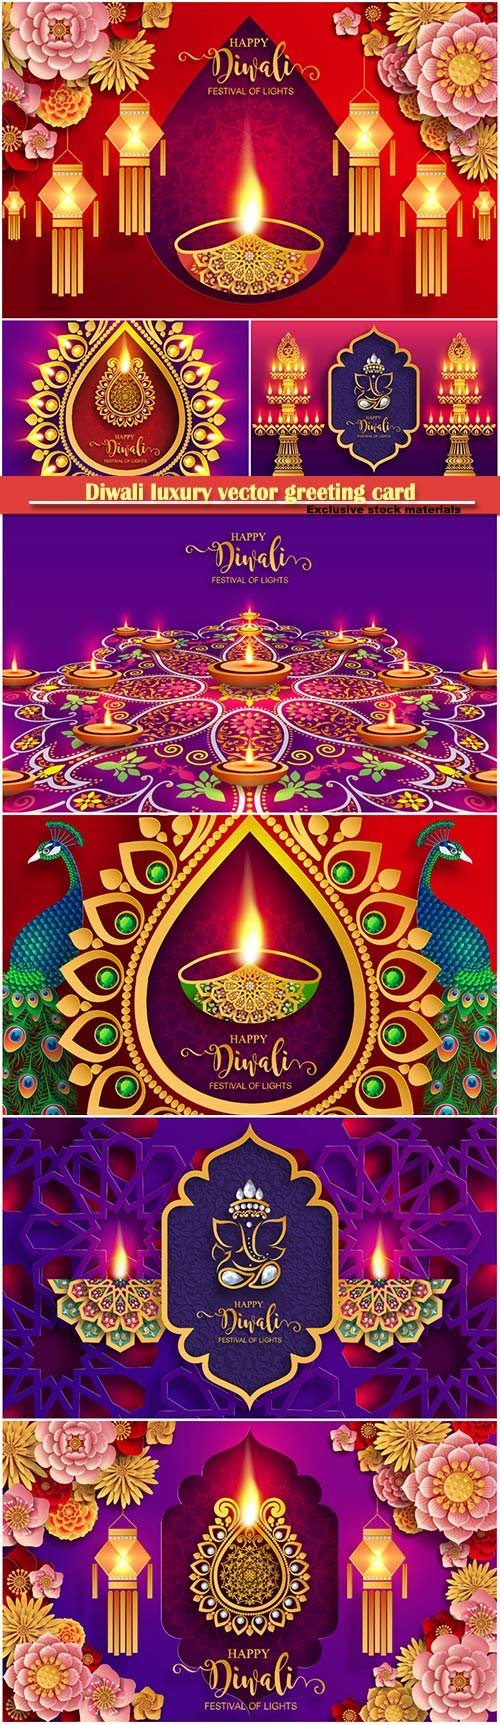 Diwali luxury vector greeting card # 4